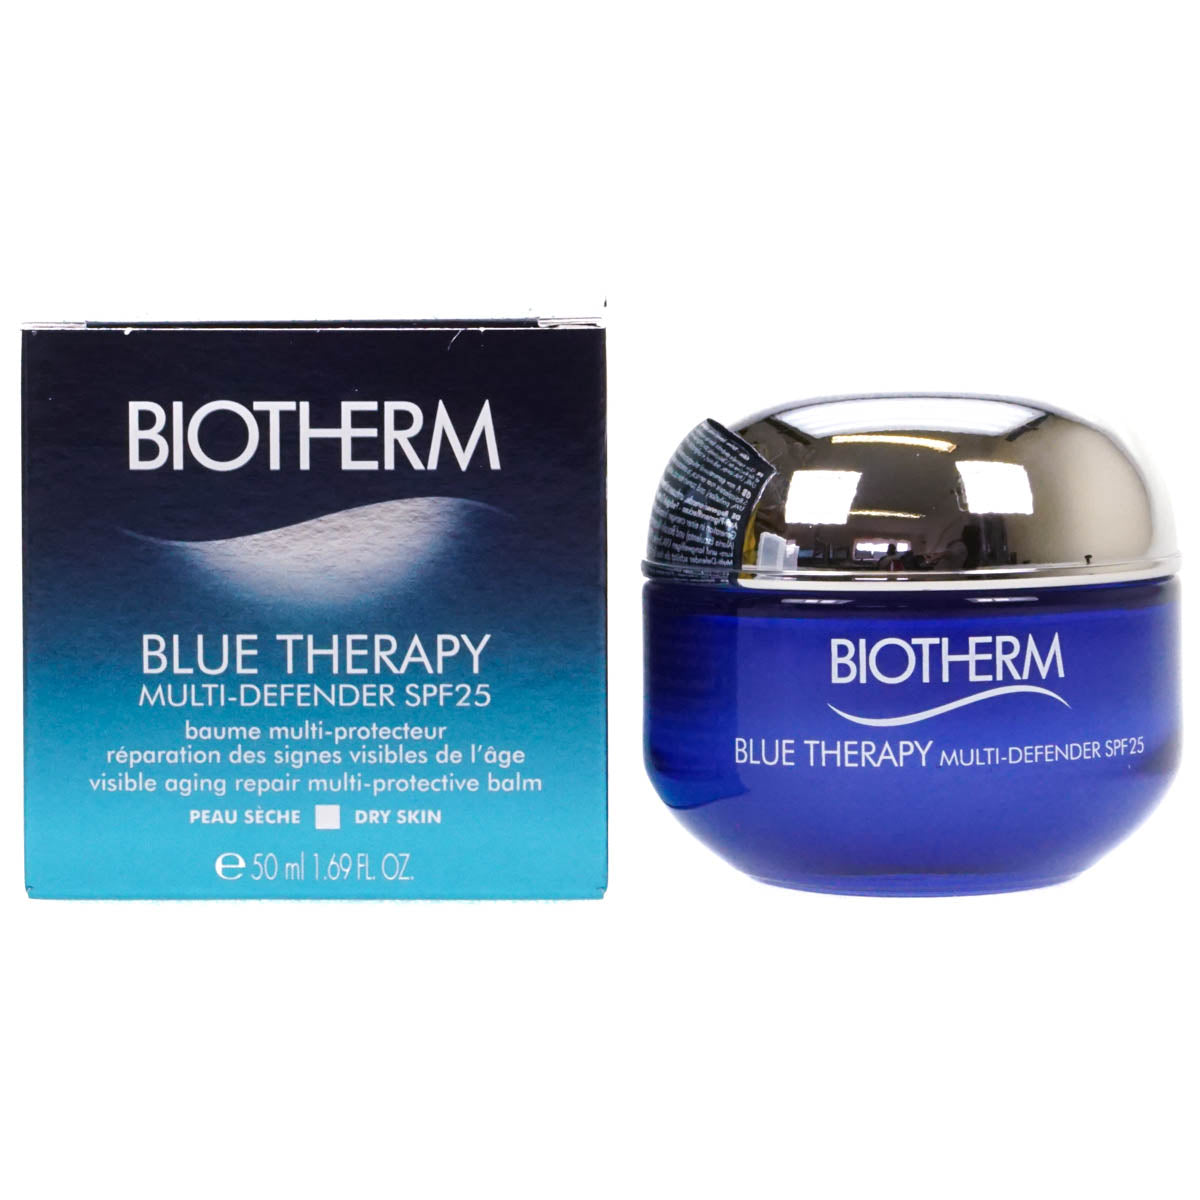 Biotherm Blue Therapy Multi Defender 50ml Moisturiser Dry Skin